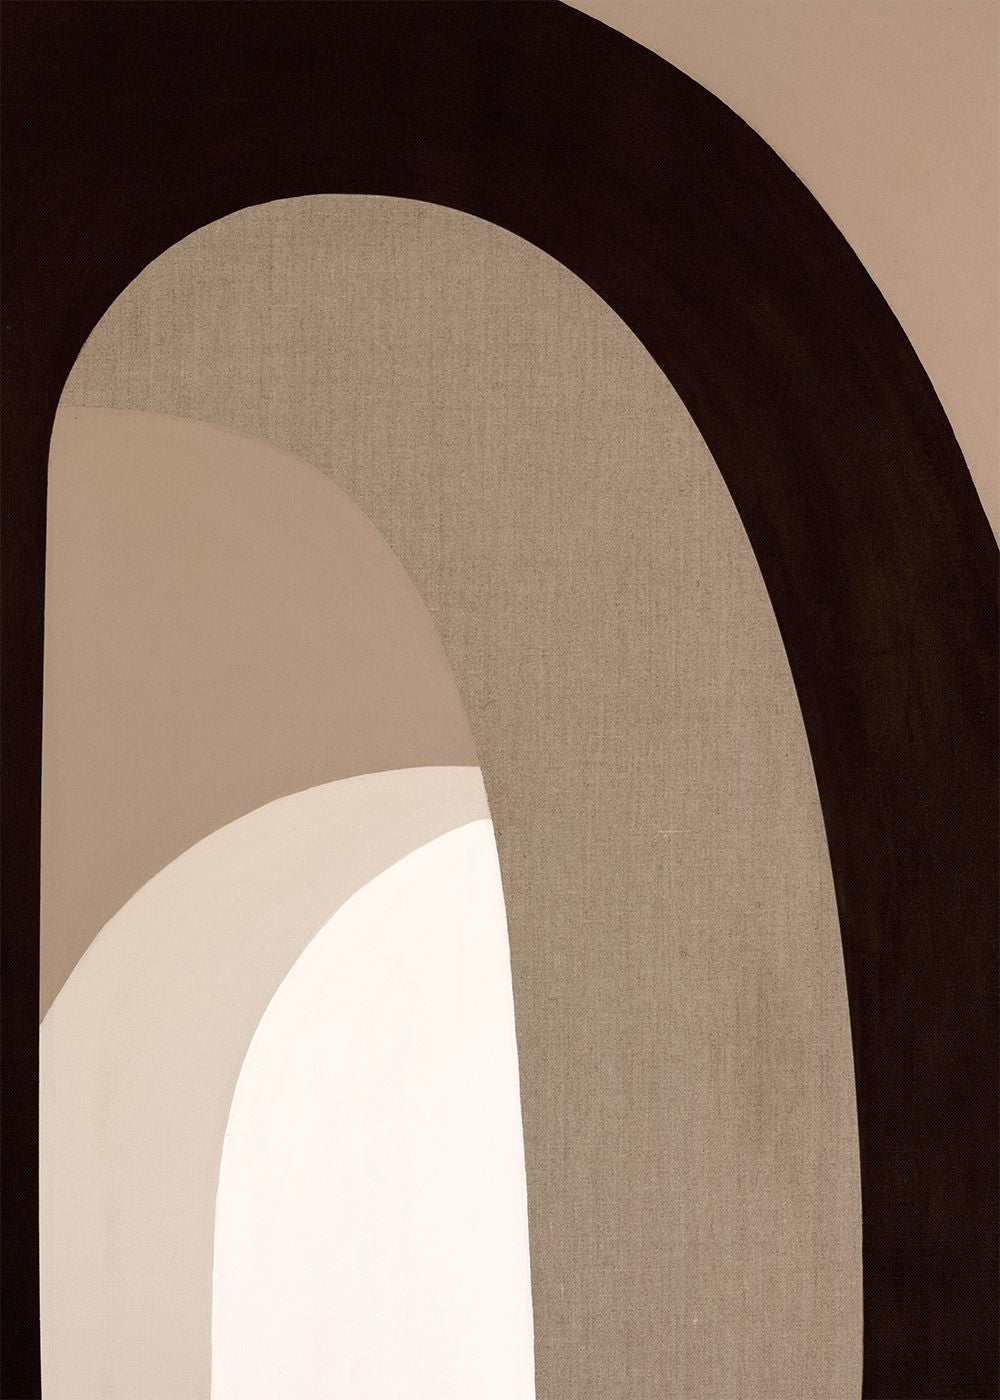 Paper Collective Arch 01 -plakaten, 30x40 cm